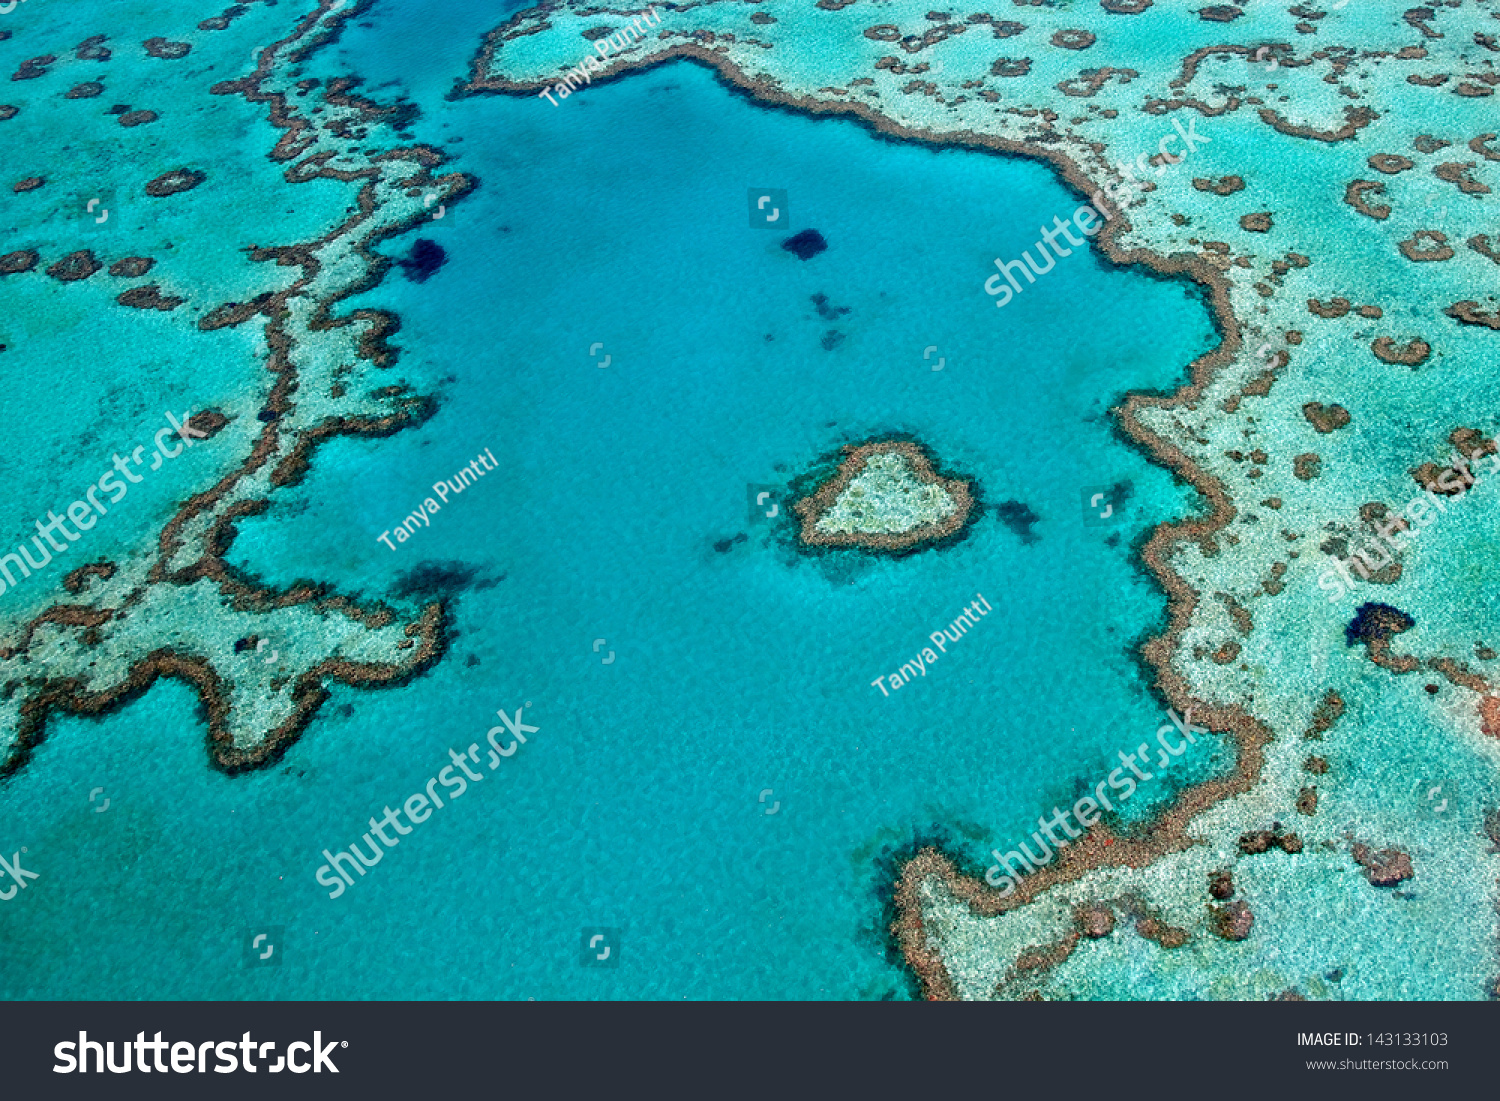 Great Barrier Reef Whitsundays Australia Stock Photo 143133103 ...